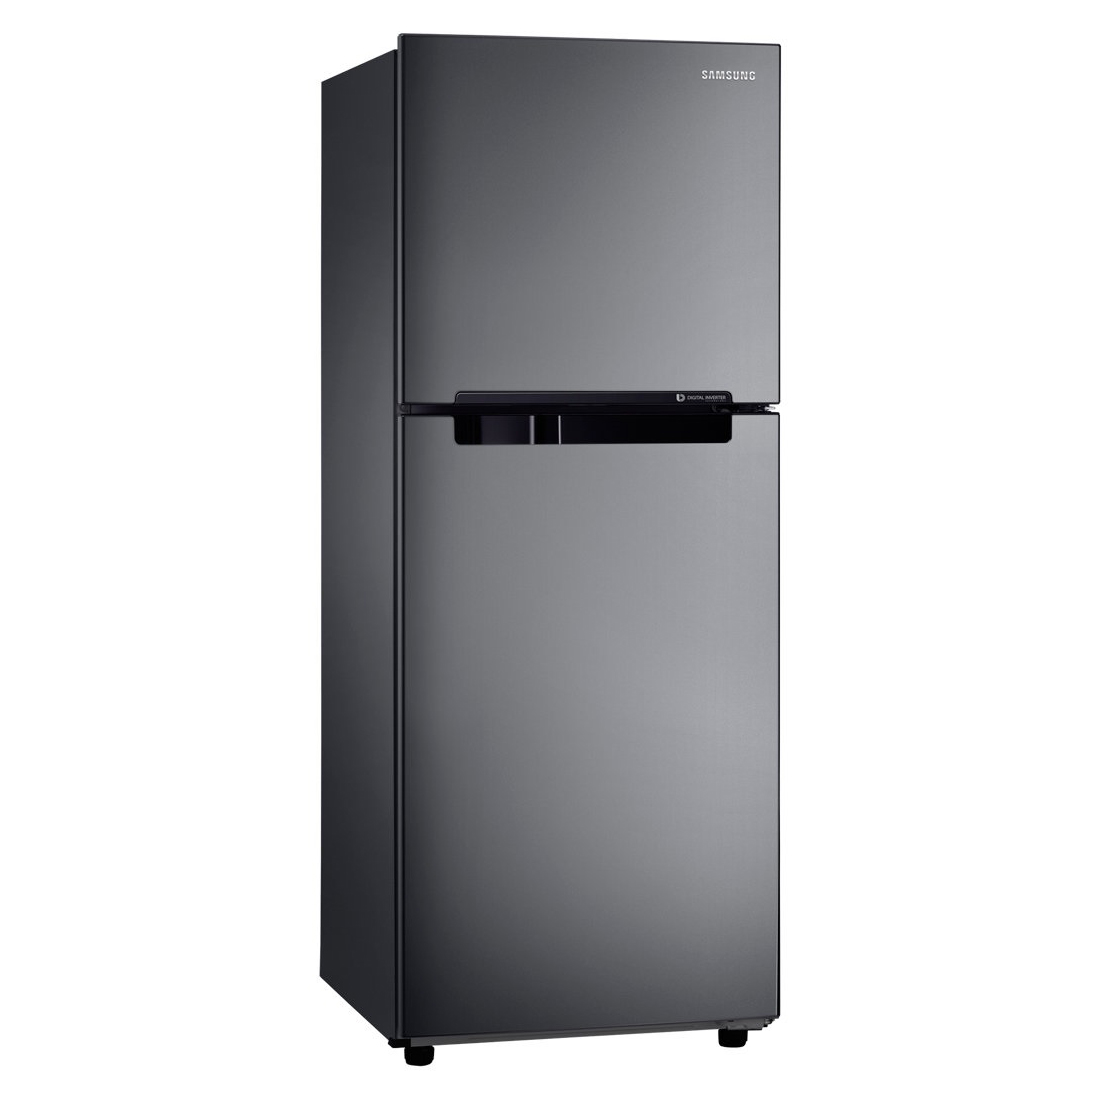 Tủ lạnh Samsung hai cửa Digital Inverter 203L RT19M300BGS/SV.